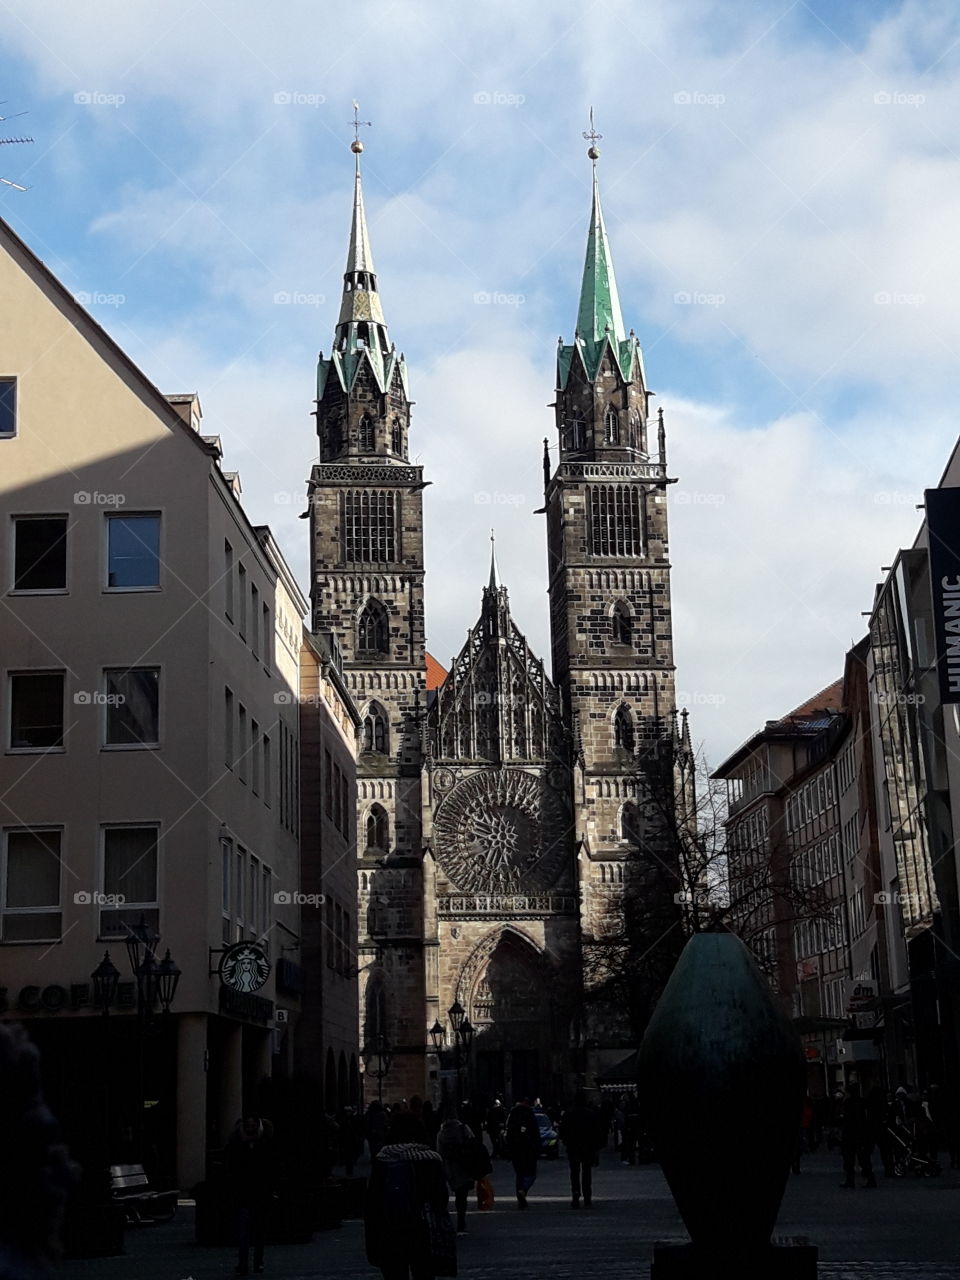 Cathedral in Nurnberger